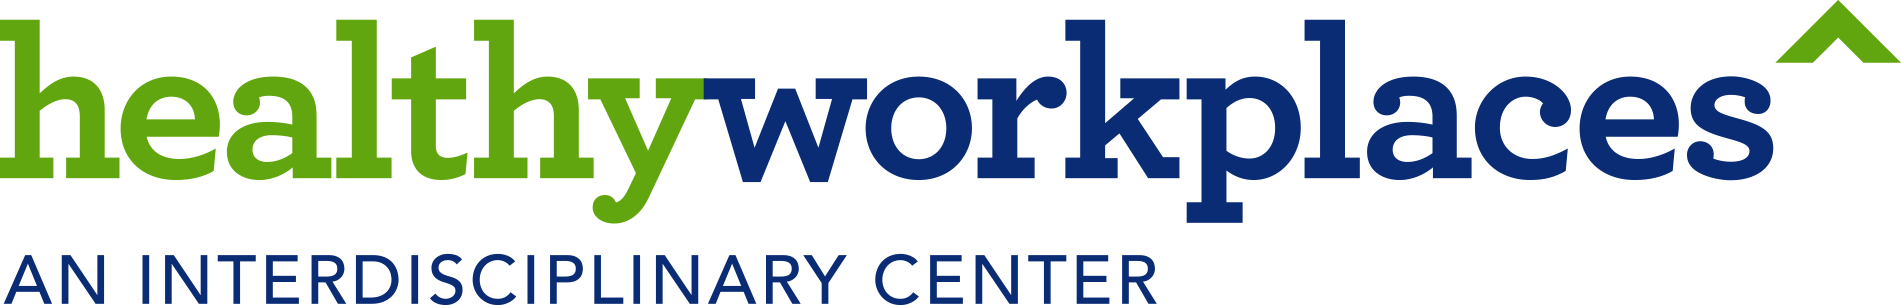 Interdisciplinary Center for Healthy Workplaces logo